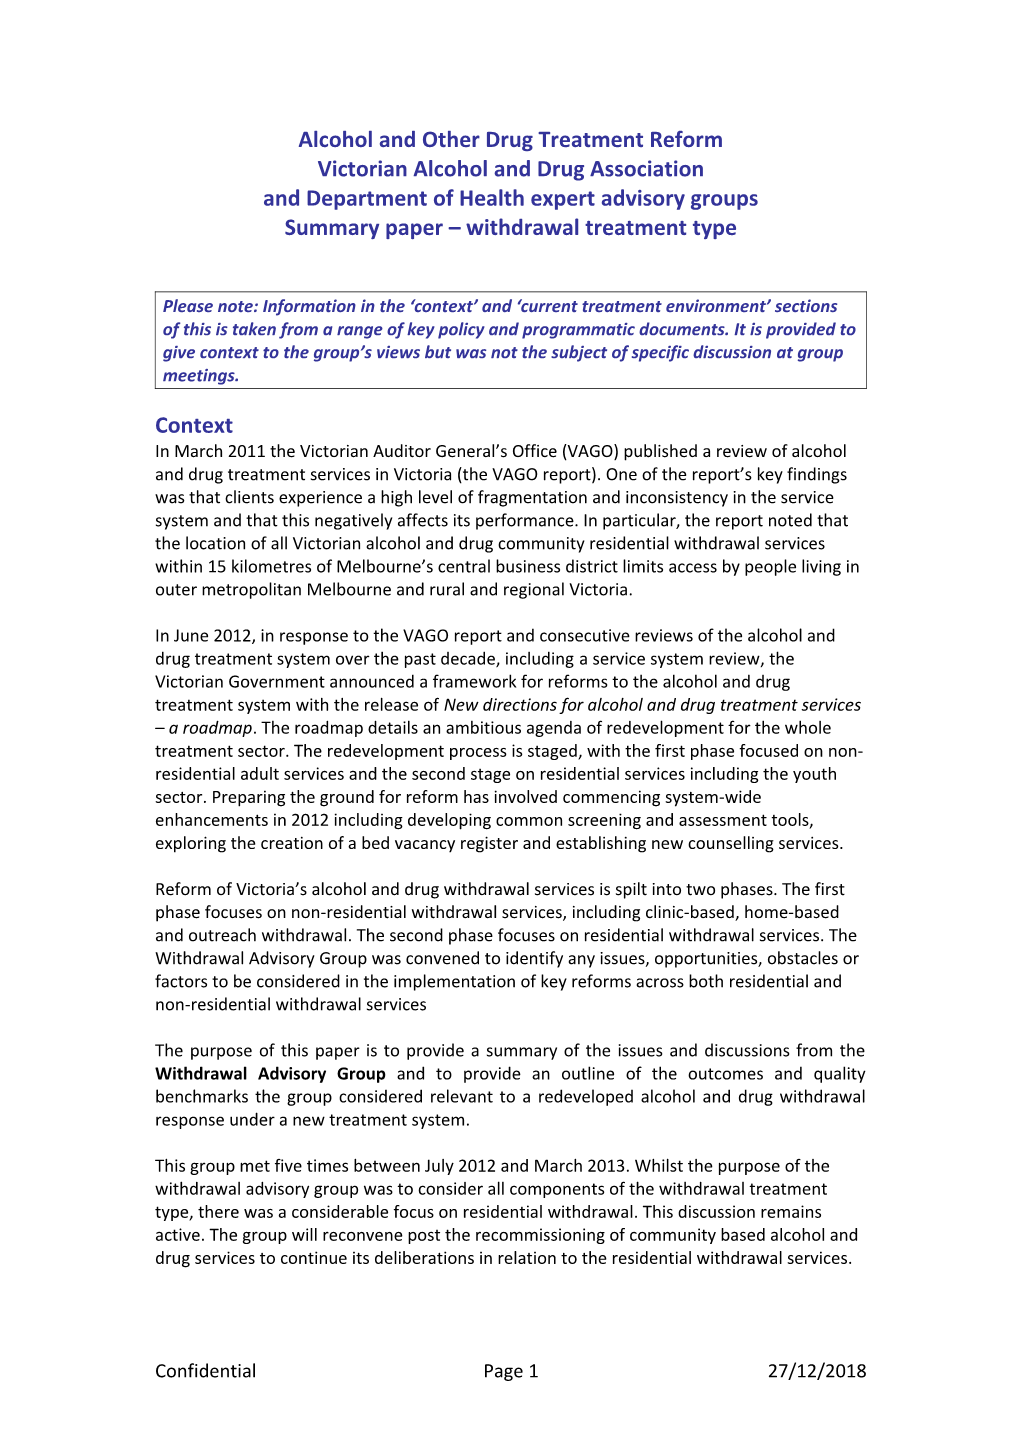 AOD Treatment Reform: VAADA/DH Expert Advisory Groups